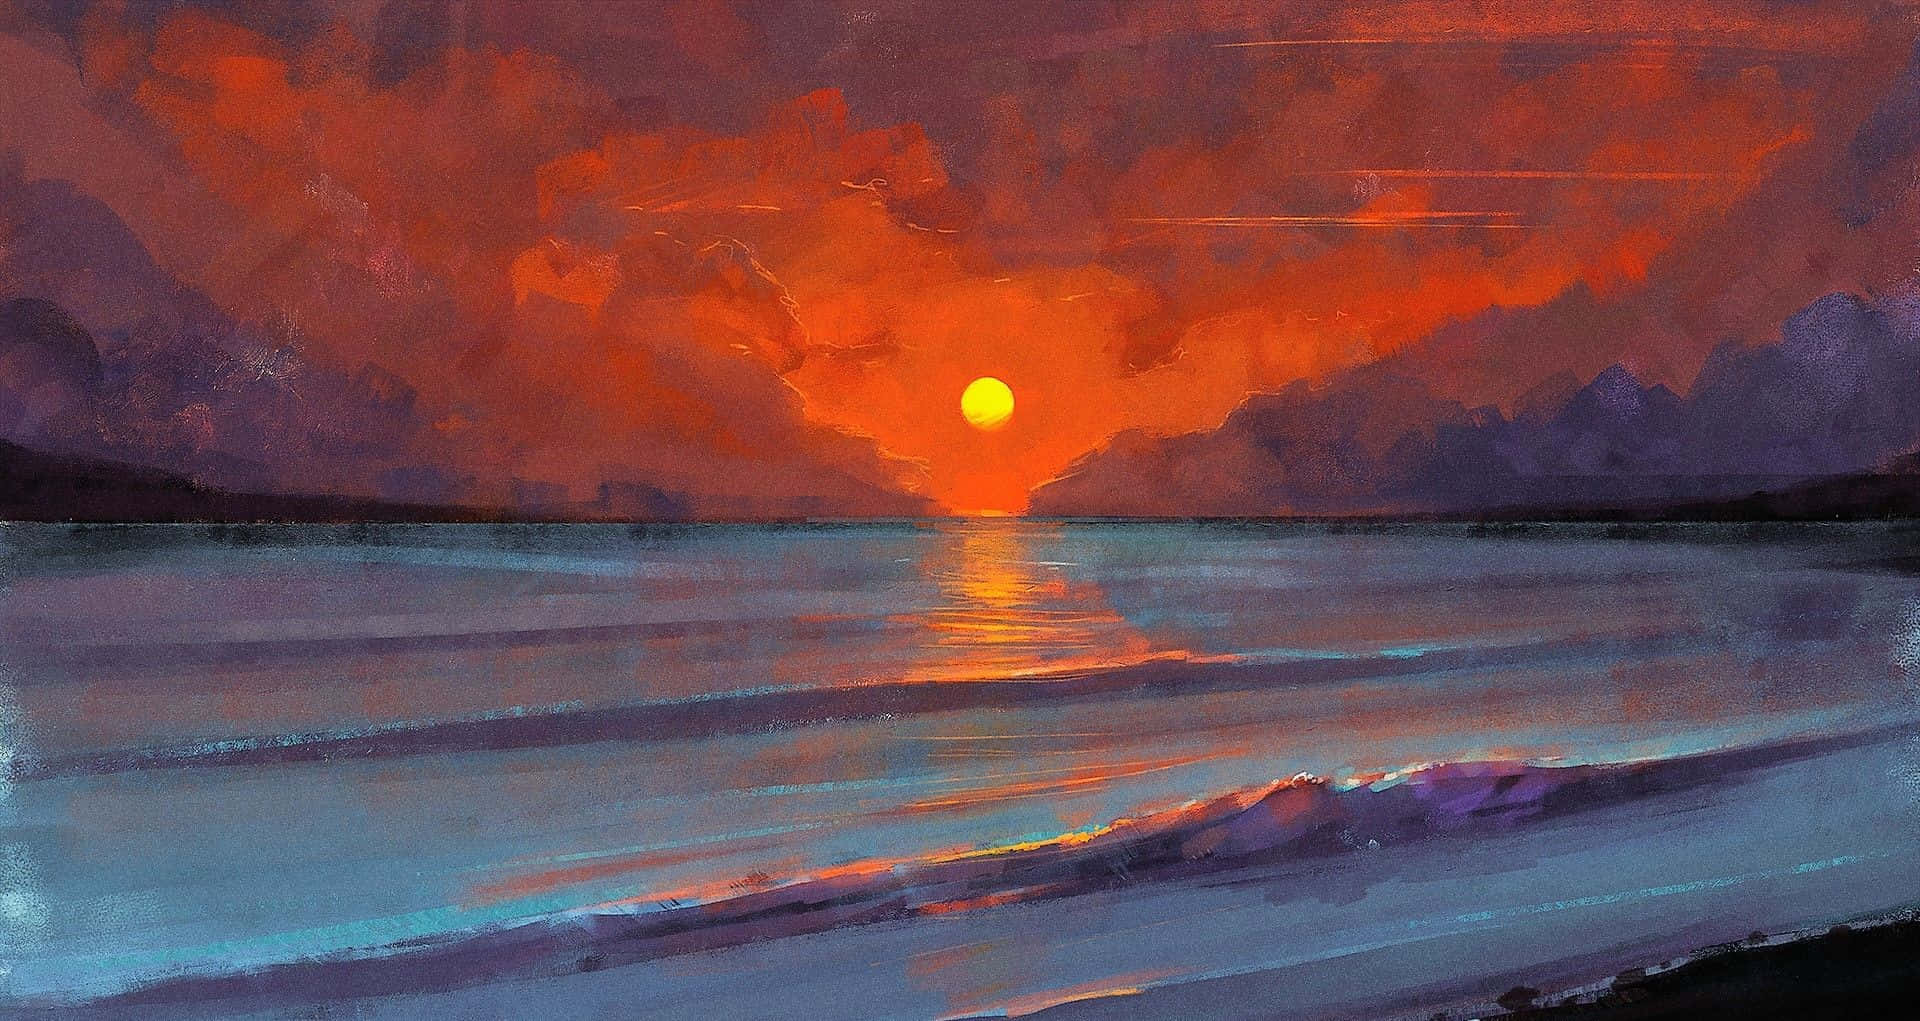 Enchanting Sunset Painting - Painter's Masterpiece Wallpaper